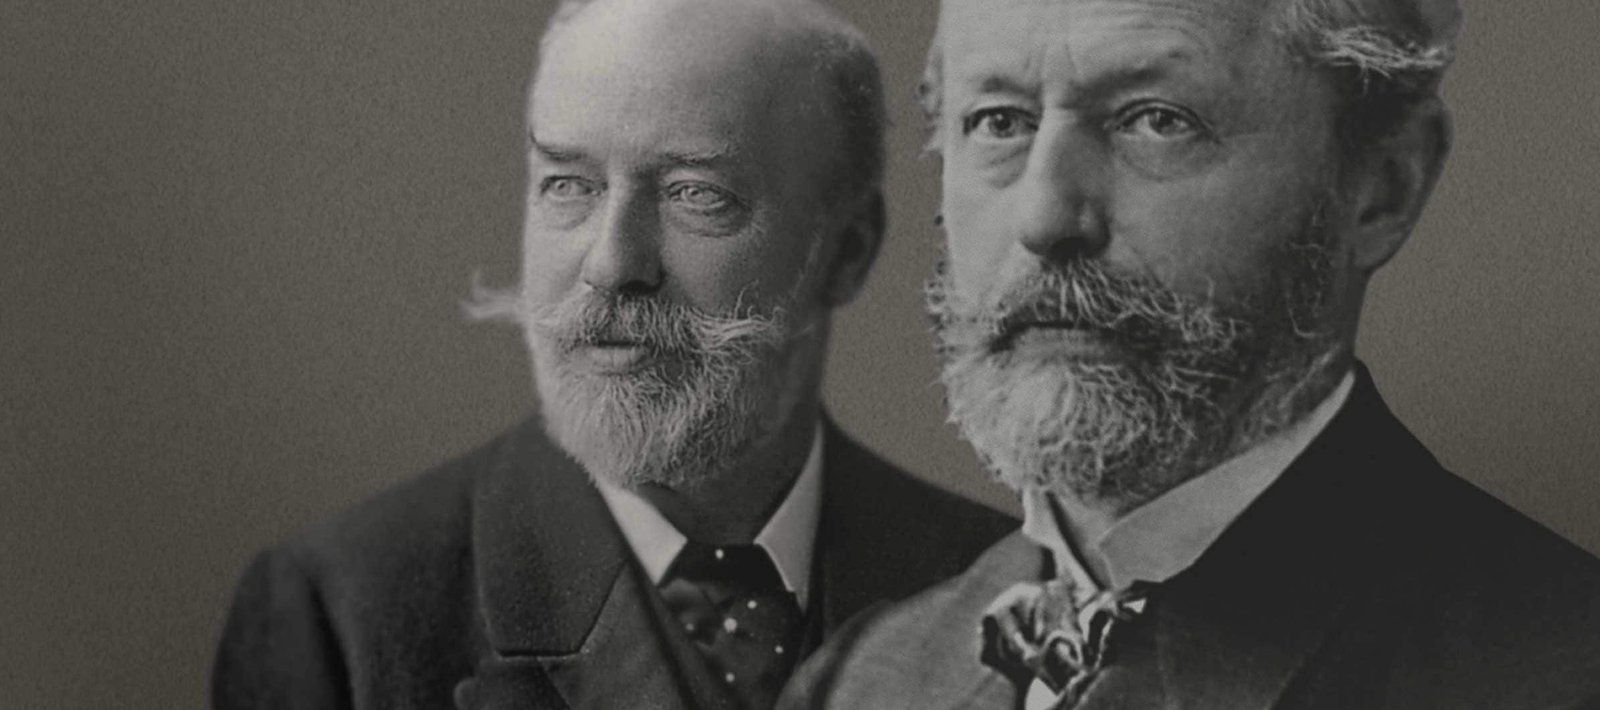 Richard and Emil A. Lange, sons of Ferdinand Adolph Lange